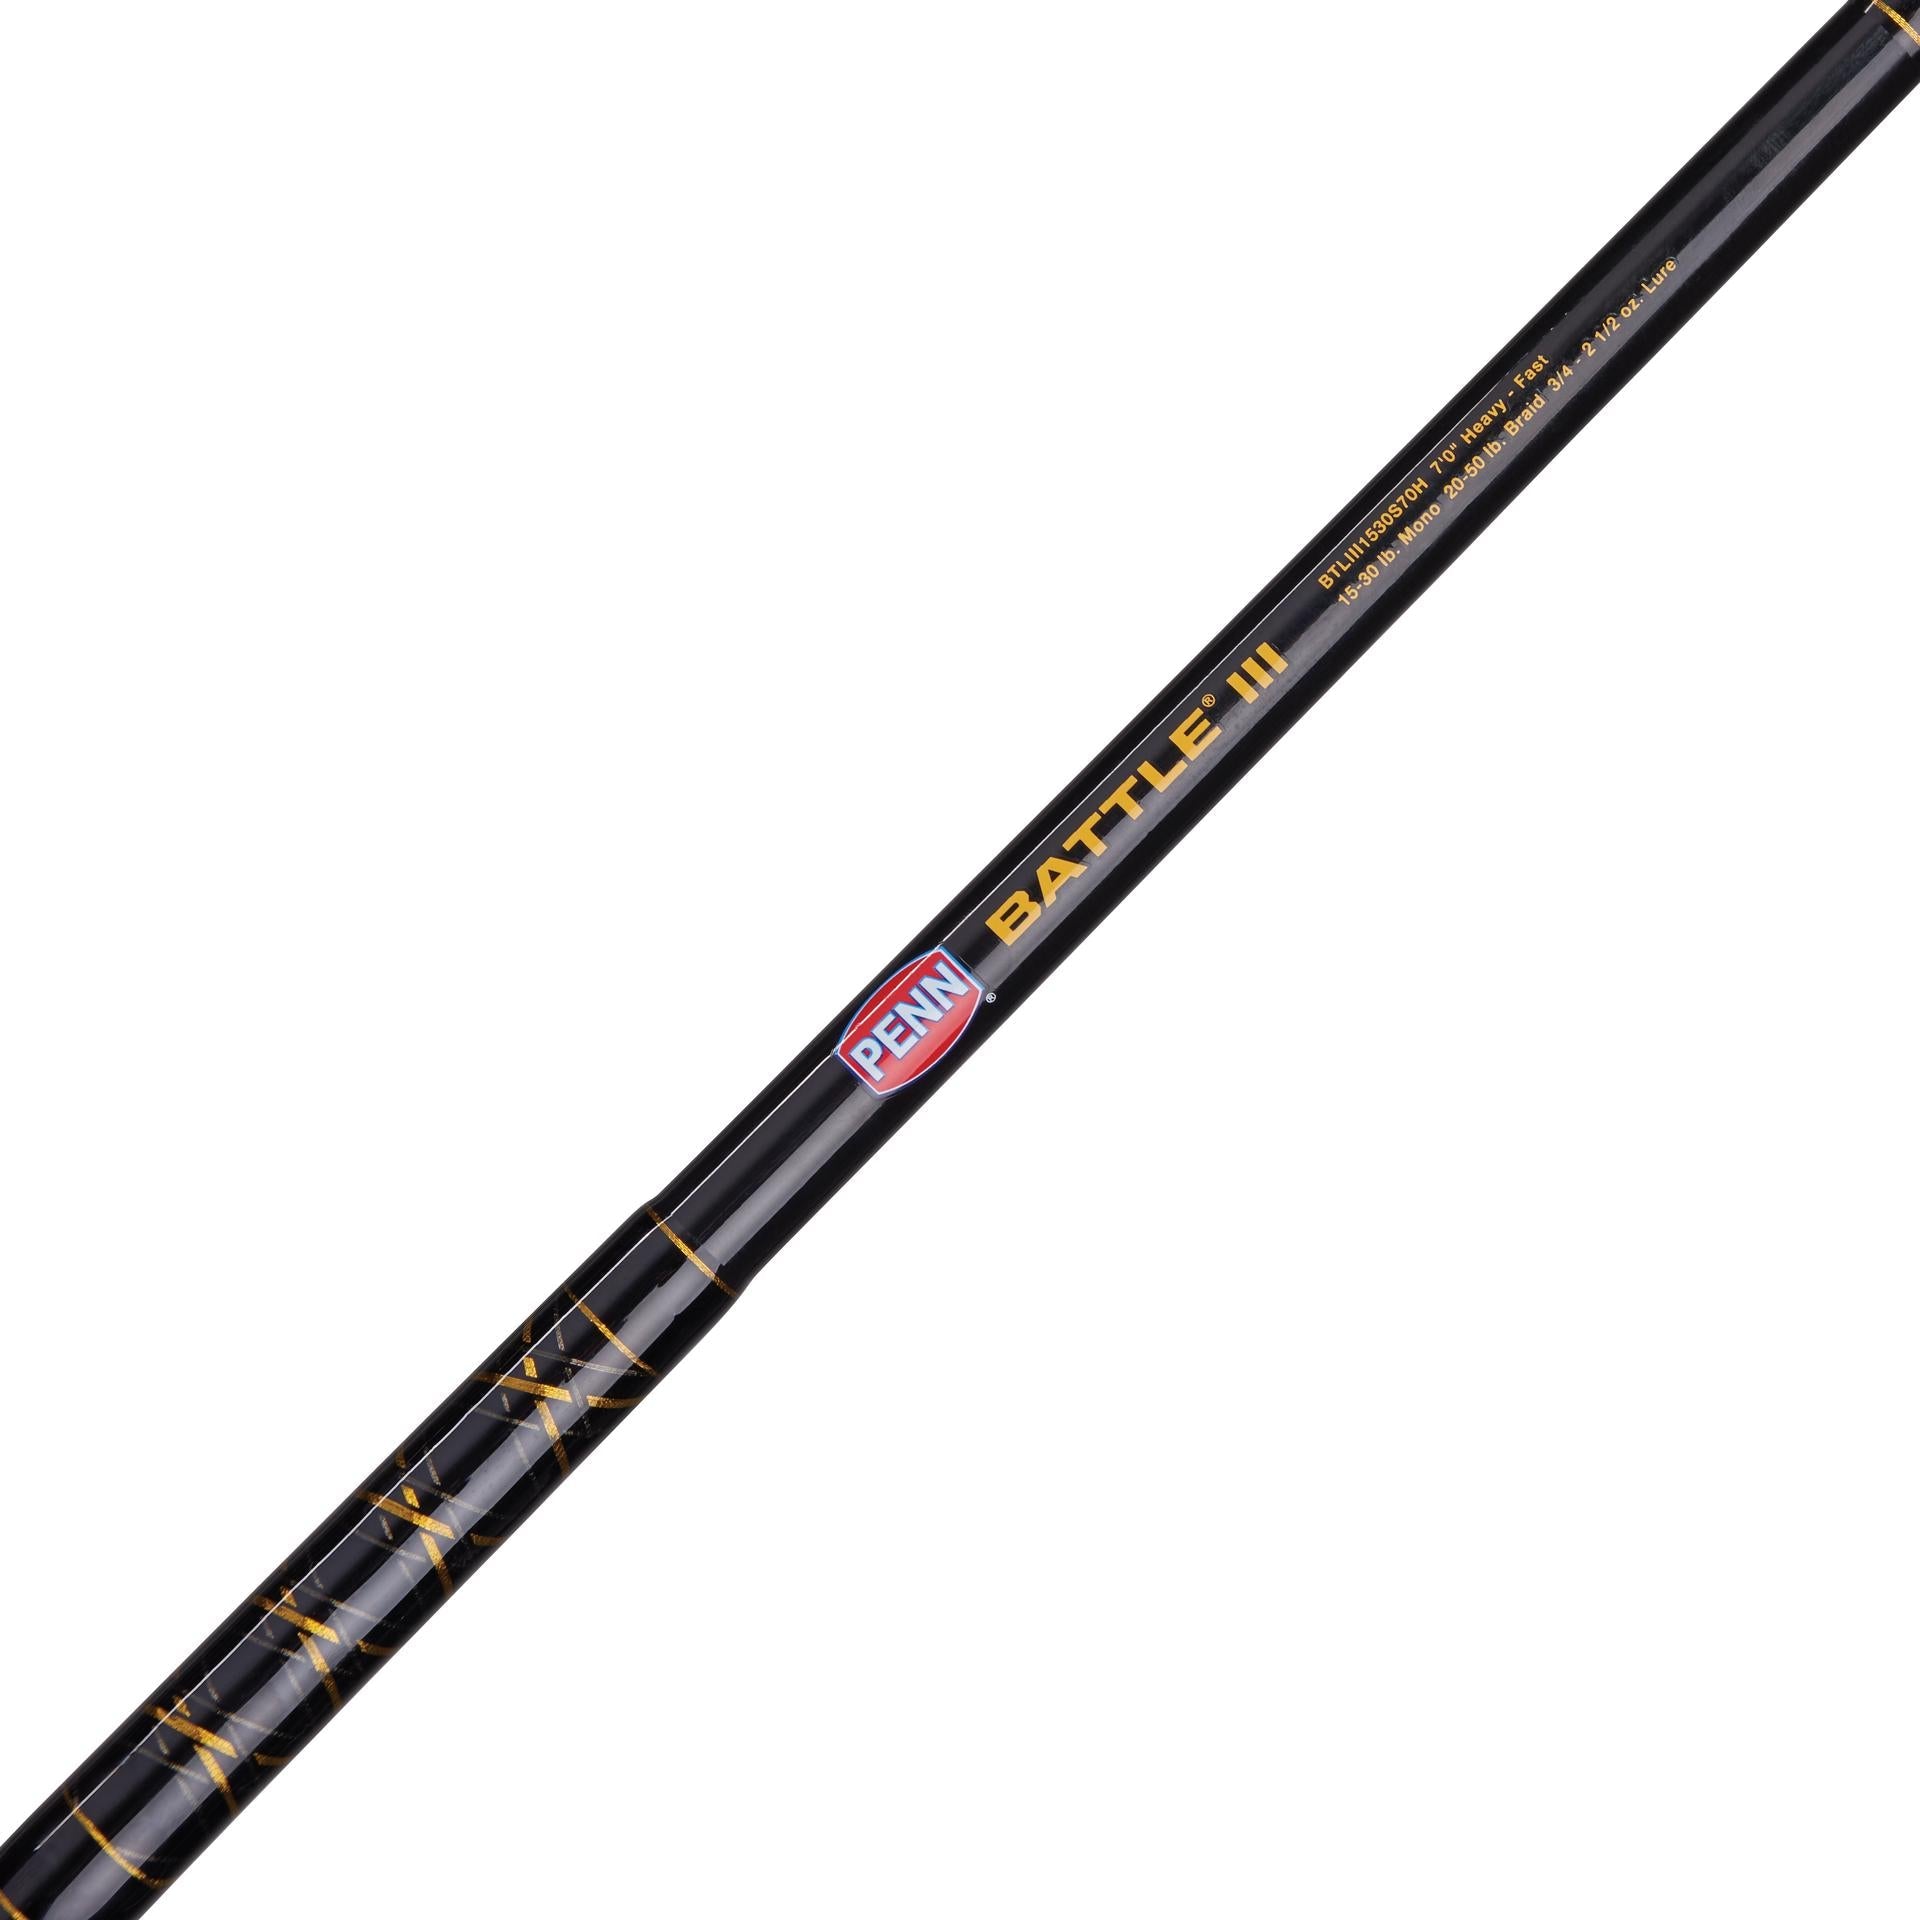 Penn 9' Battle Fly Rod, 10wt Line Rating, 4-Piece Saltwater Graphite  Fishing Rod, Black & Gold